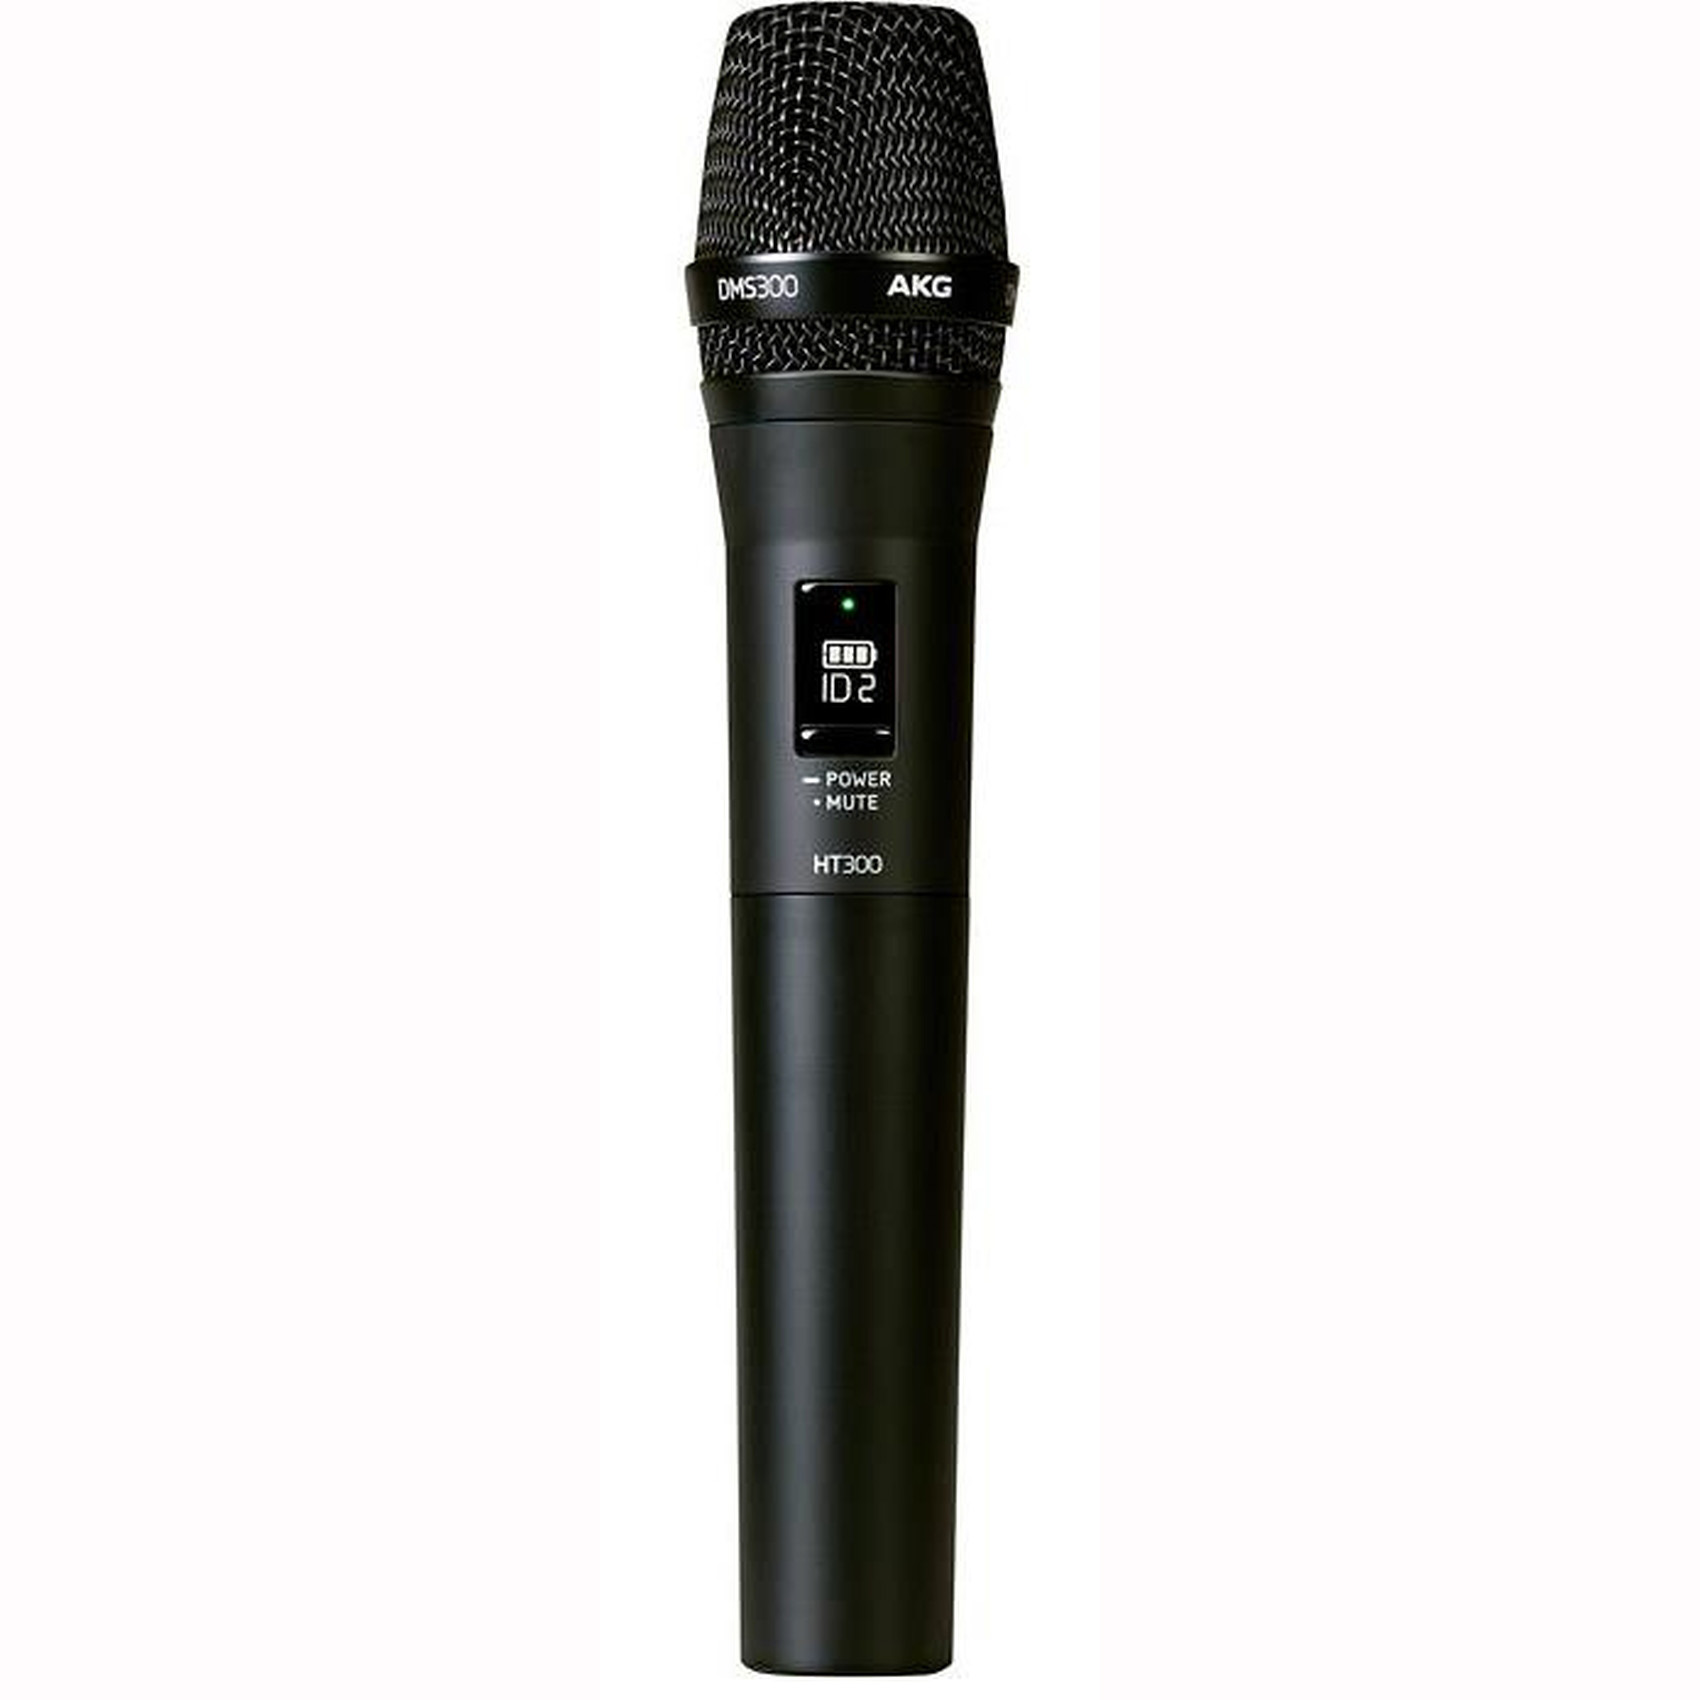 AKG Dms300 Vocal Set Вокальные радиосистемы